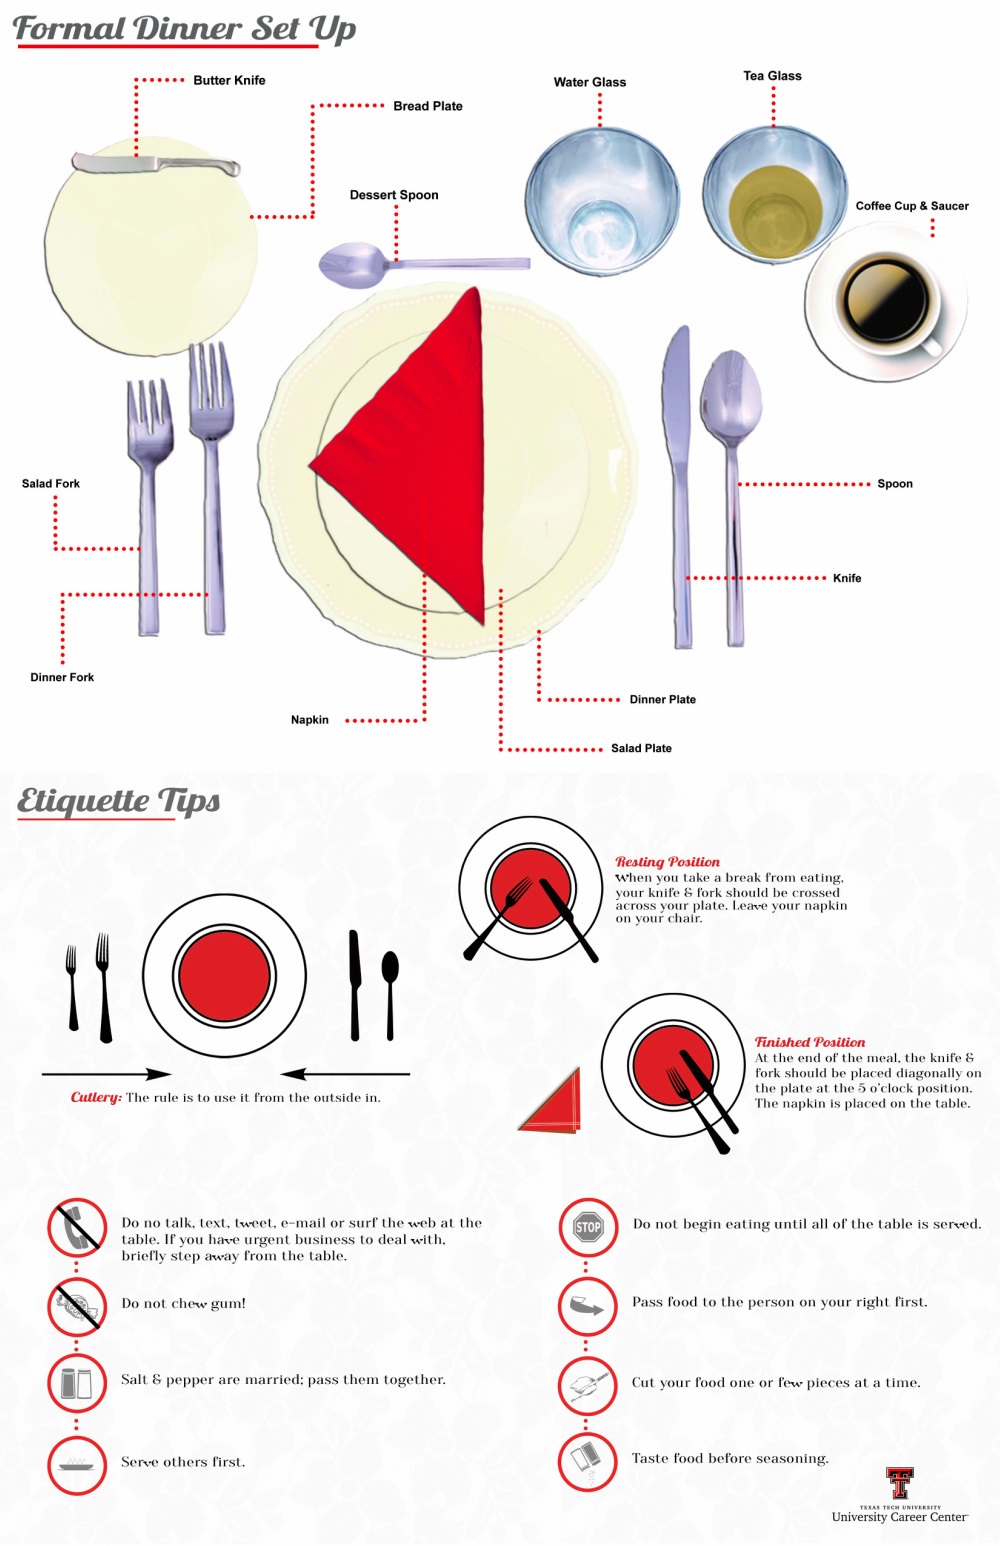 Formal Dinner Set Up & Etiquette Tips